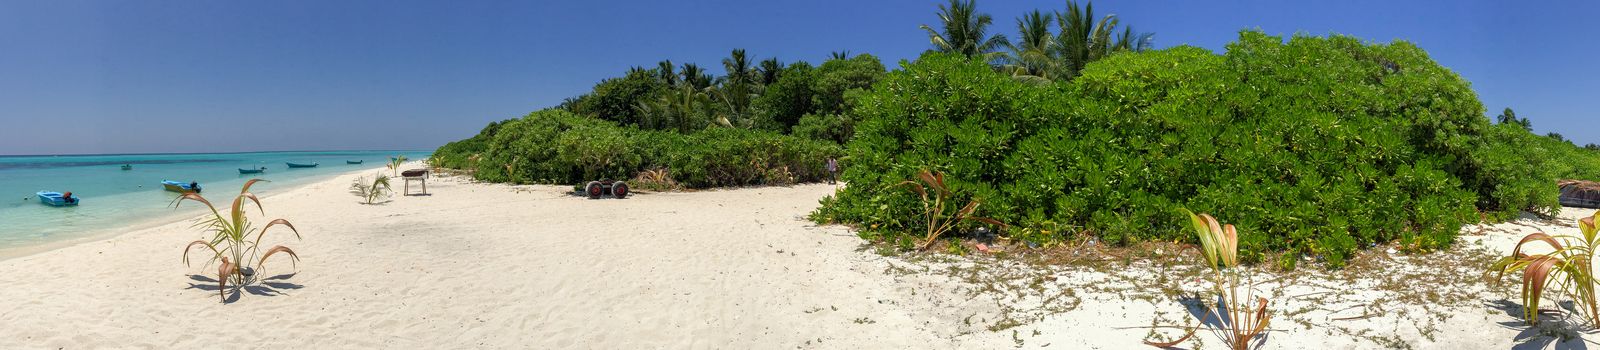 Vegetation of Maldive Islands